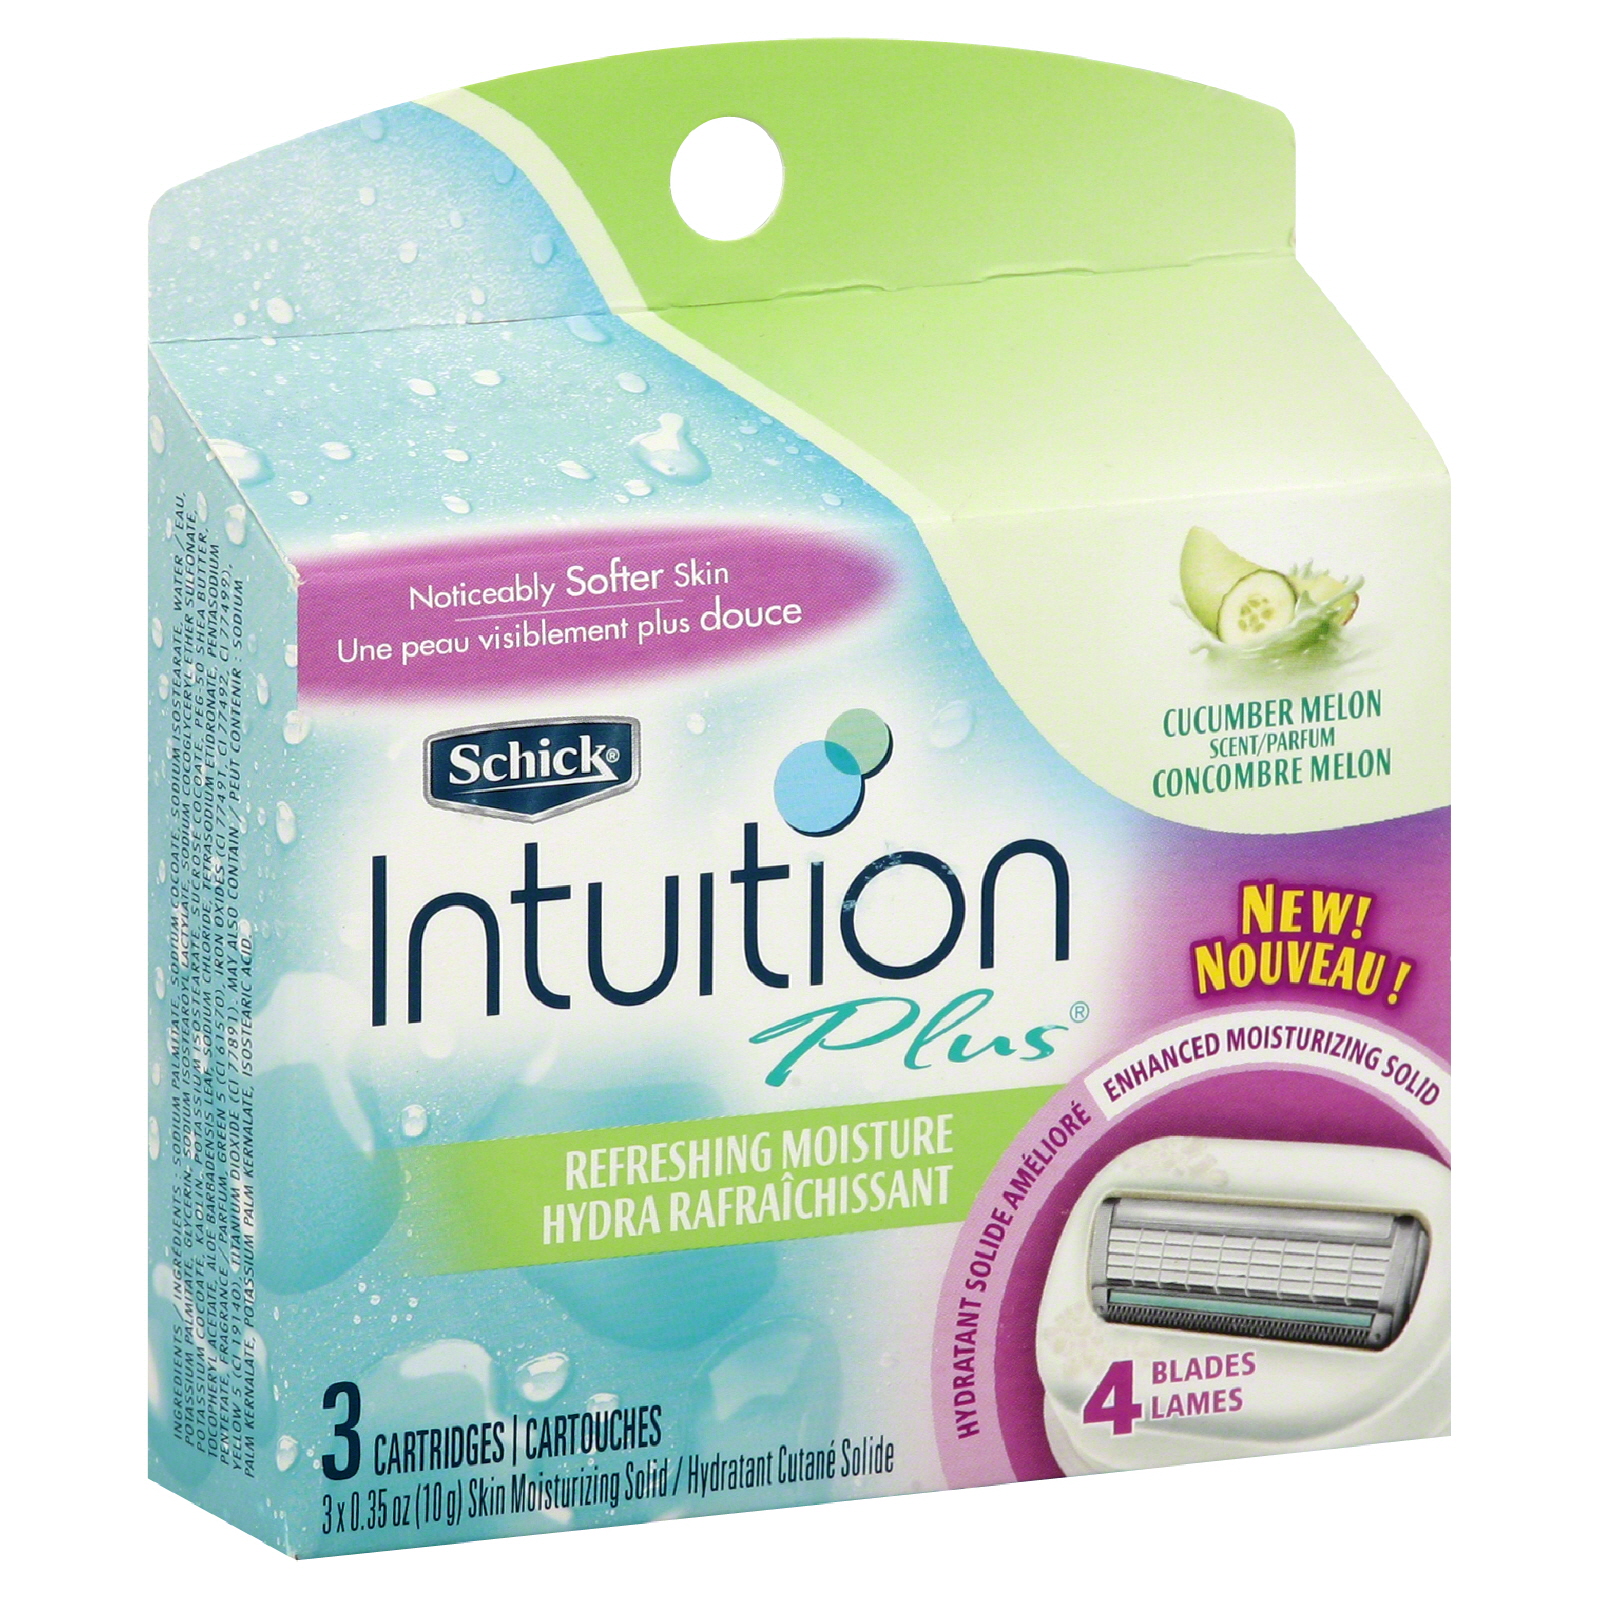 Schick Intuition Plus Cartridges, Refreshing Moisture, Cucumber Melon, 3 - 0.35 oz (10 g) cartridges